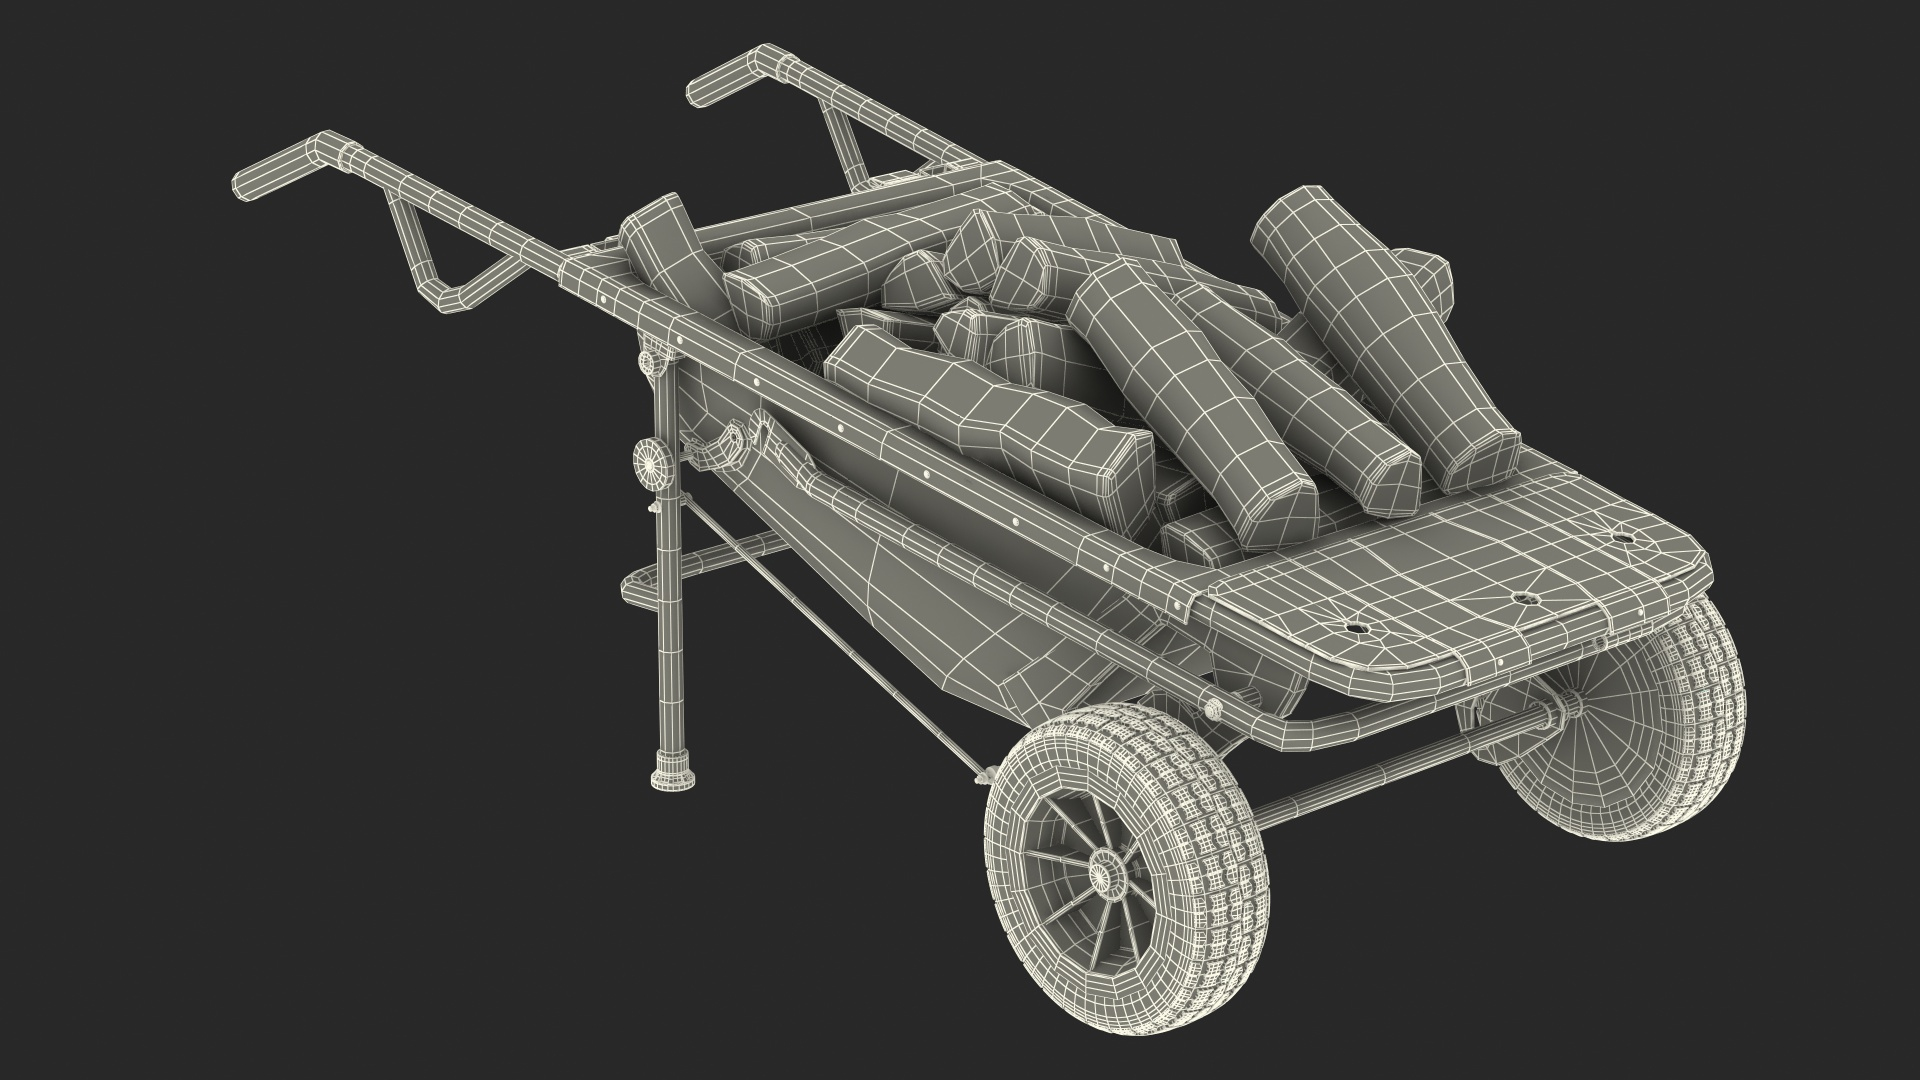 WORX Aerocart 8in1 Wheelbarrow Yard Cart with Firewood 3D Model $39 - .3ds  .blend .c4d .fbx .max .ma .lxo .obj .gltf .upk .unitypackage .usdz - Free3D